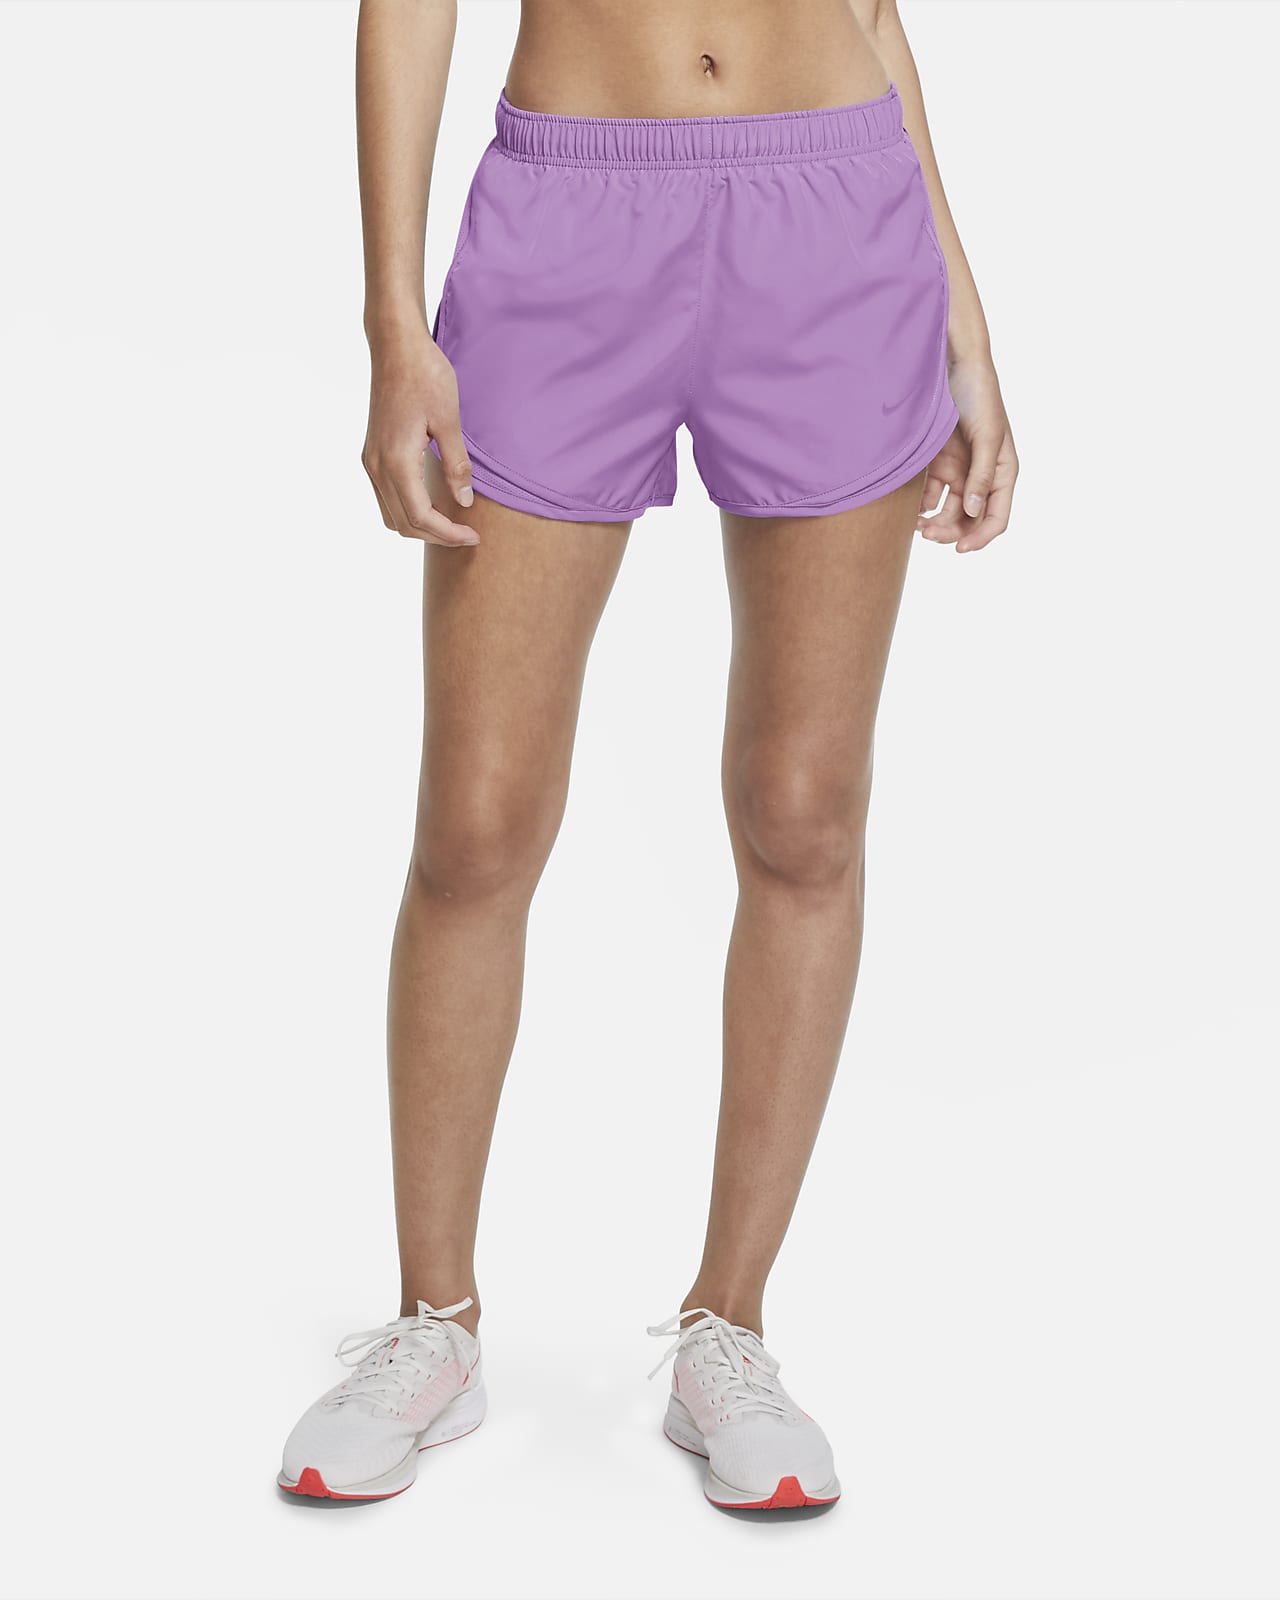 Шорты найк ДРИ фит. Шорты Nike Dri Fit женские. Шорты Nike Dri-Fit фиолетовый. Nike Purple шорты. Где найти фиолетовые шорты